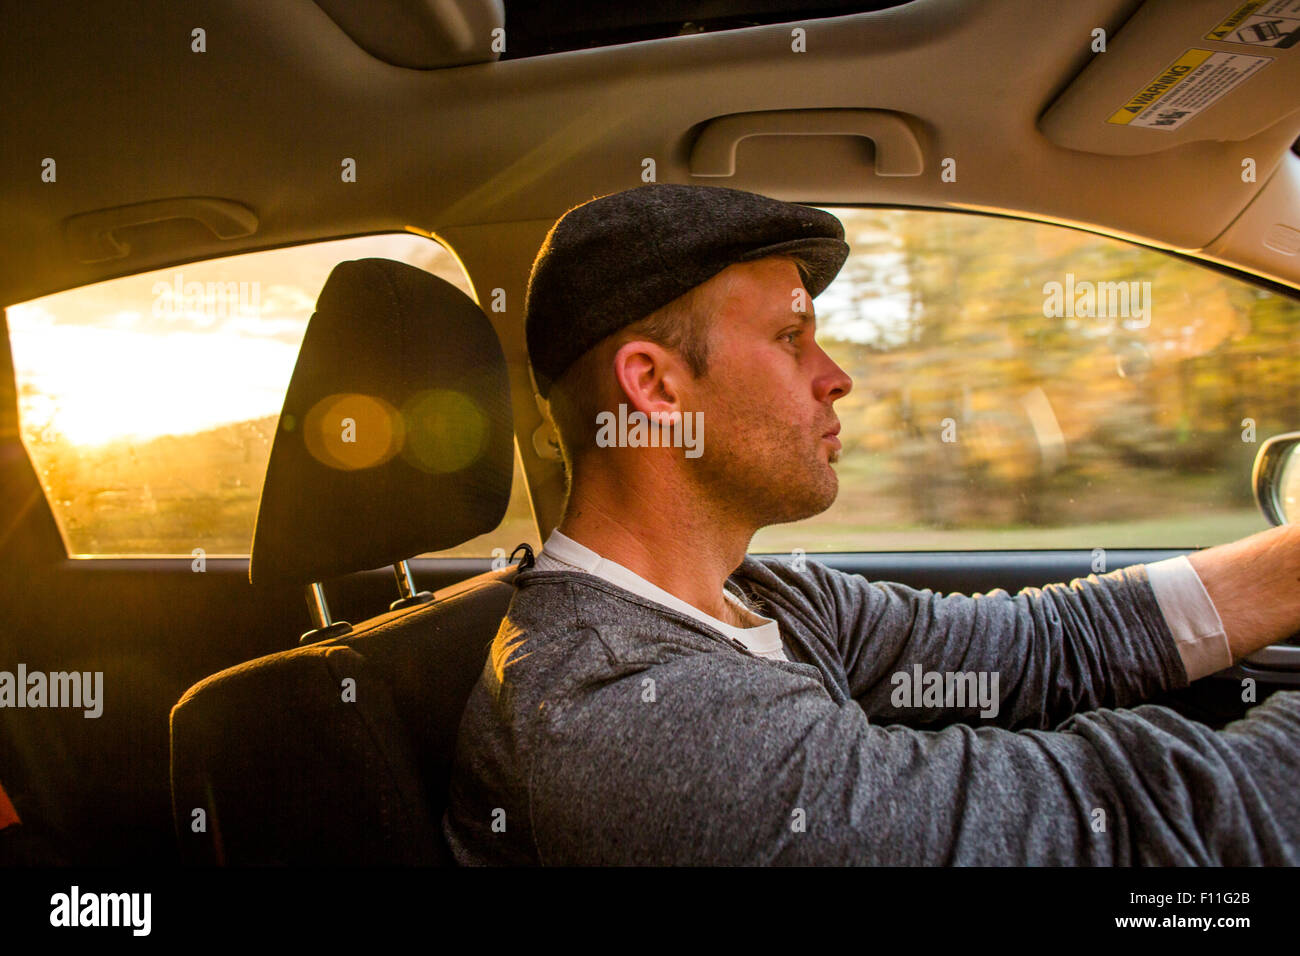 Caucasian man driving car at sunset Stock Photo